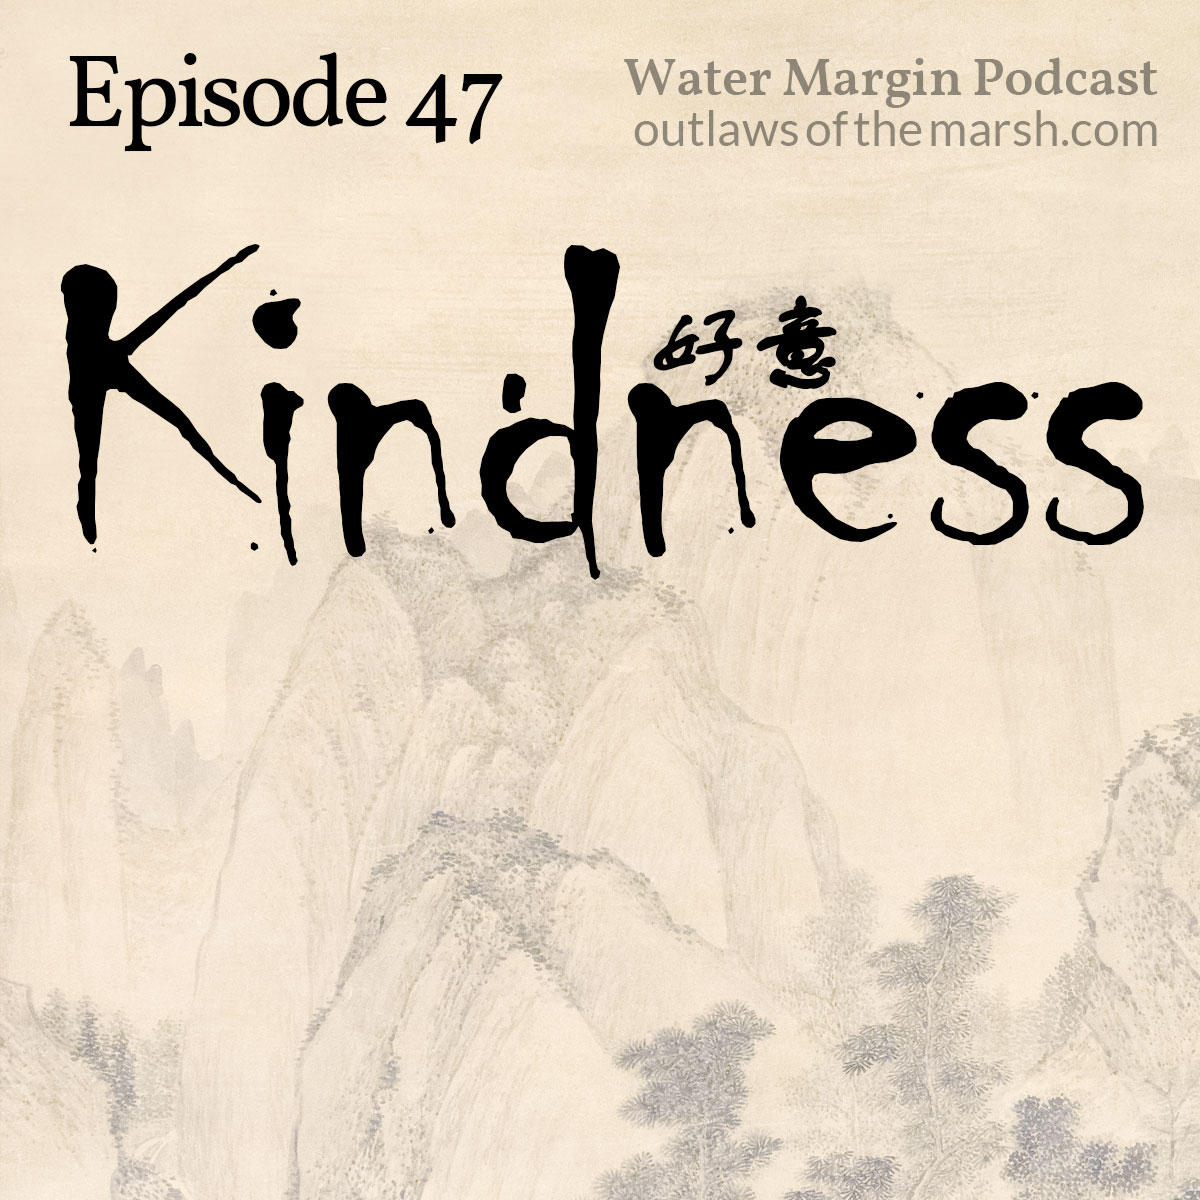 Water Margin Podcast: Episode 047